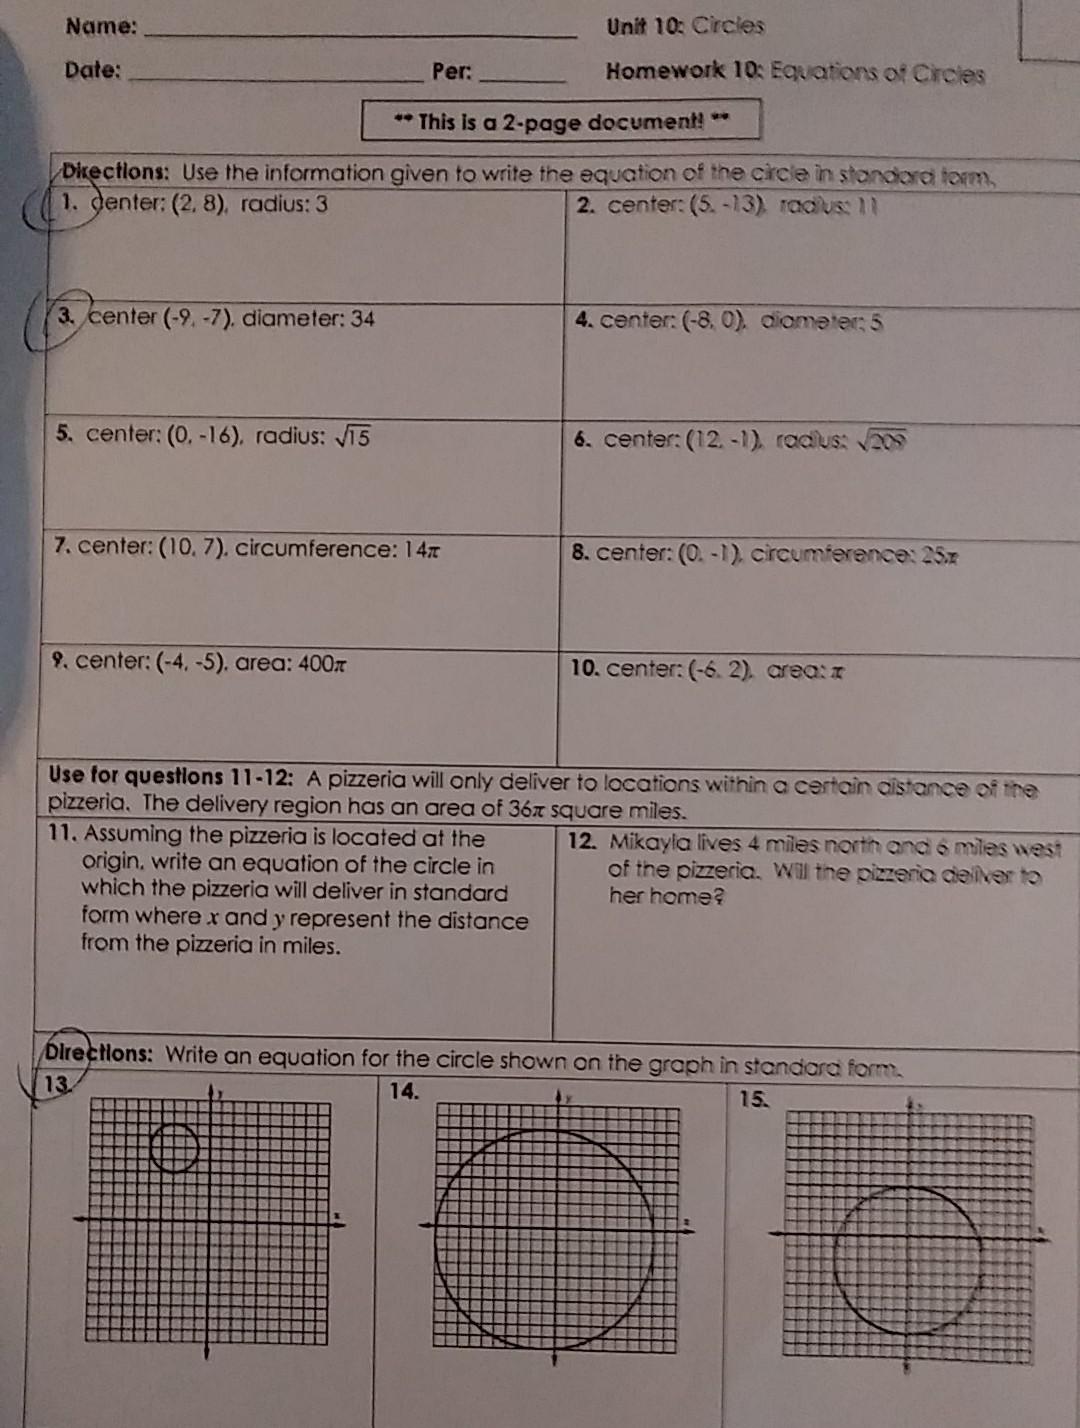 homework 9 standard form of a circle